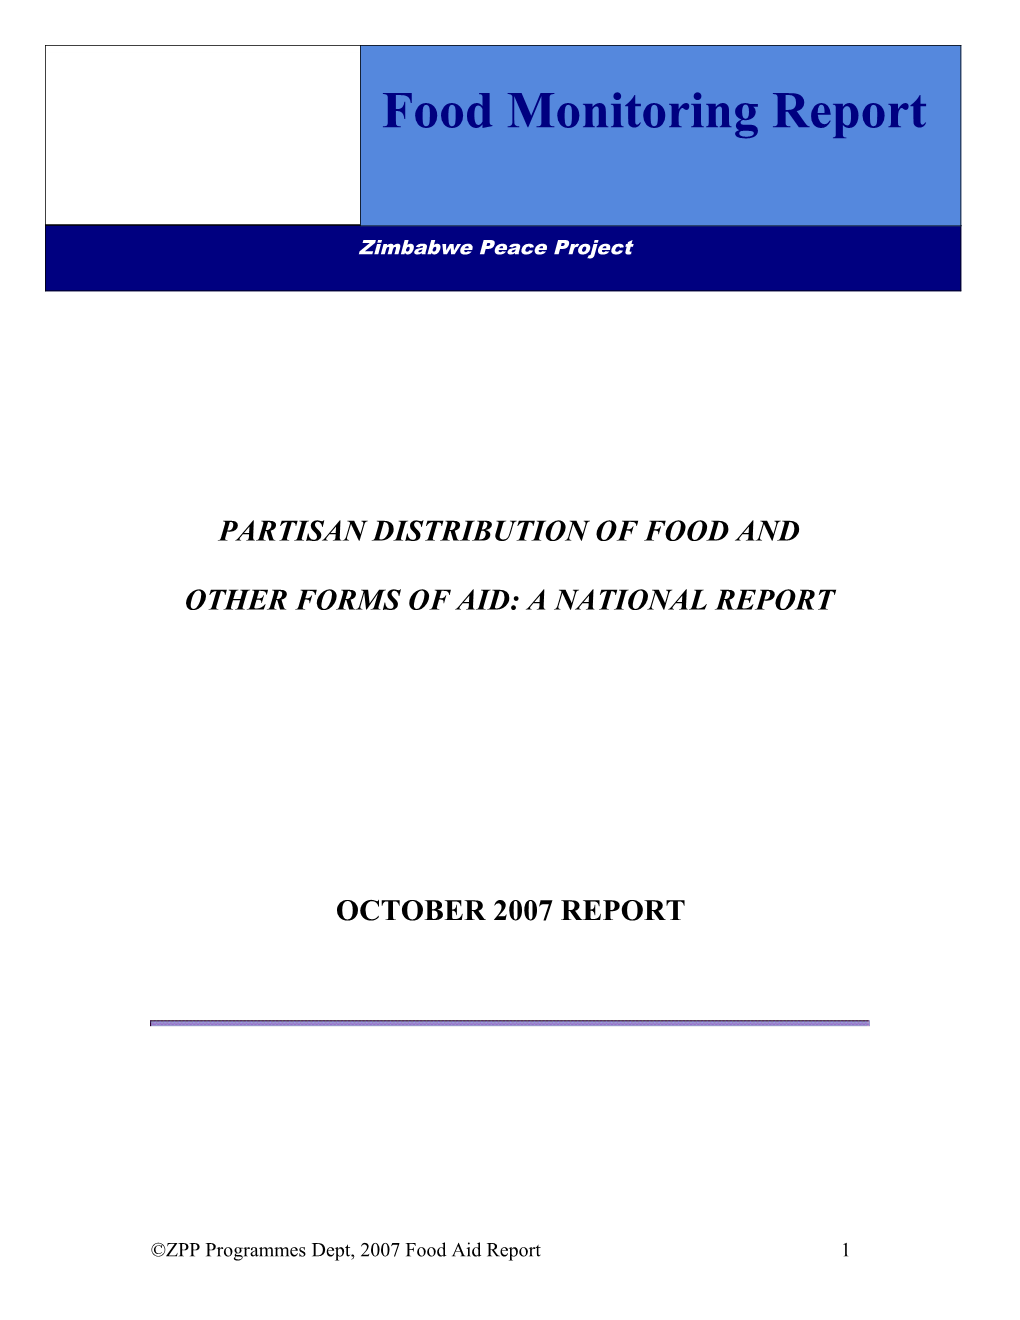 ZPP Programmes Dept, 2007 Food Aid Report 1